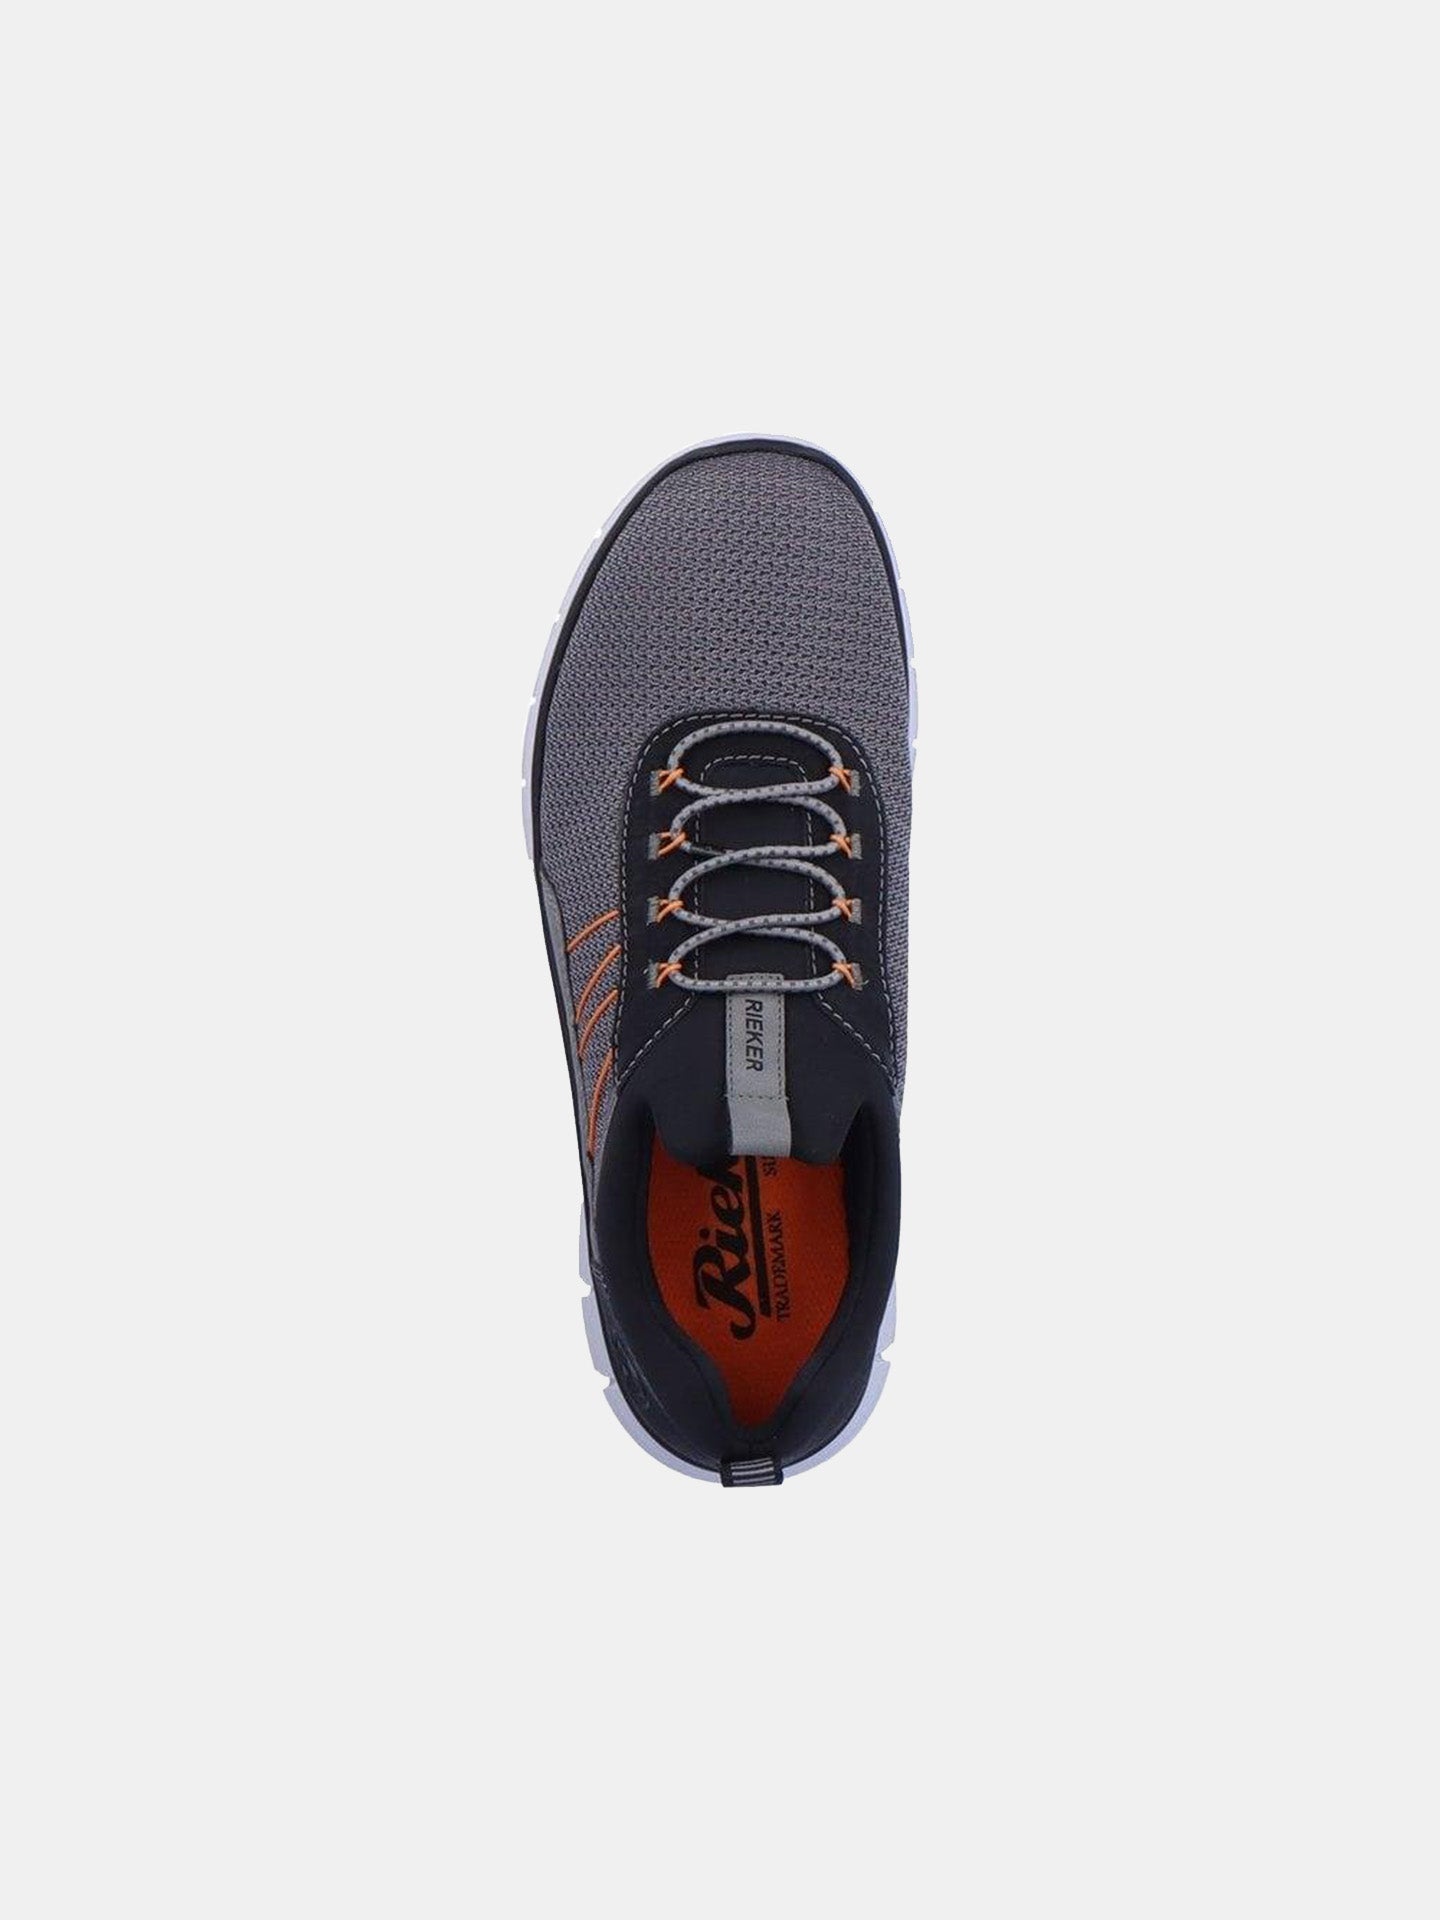 Rieker B7753 Men's Casual Shoes